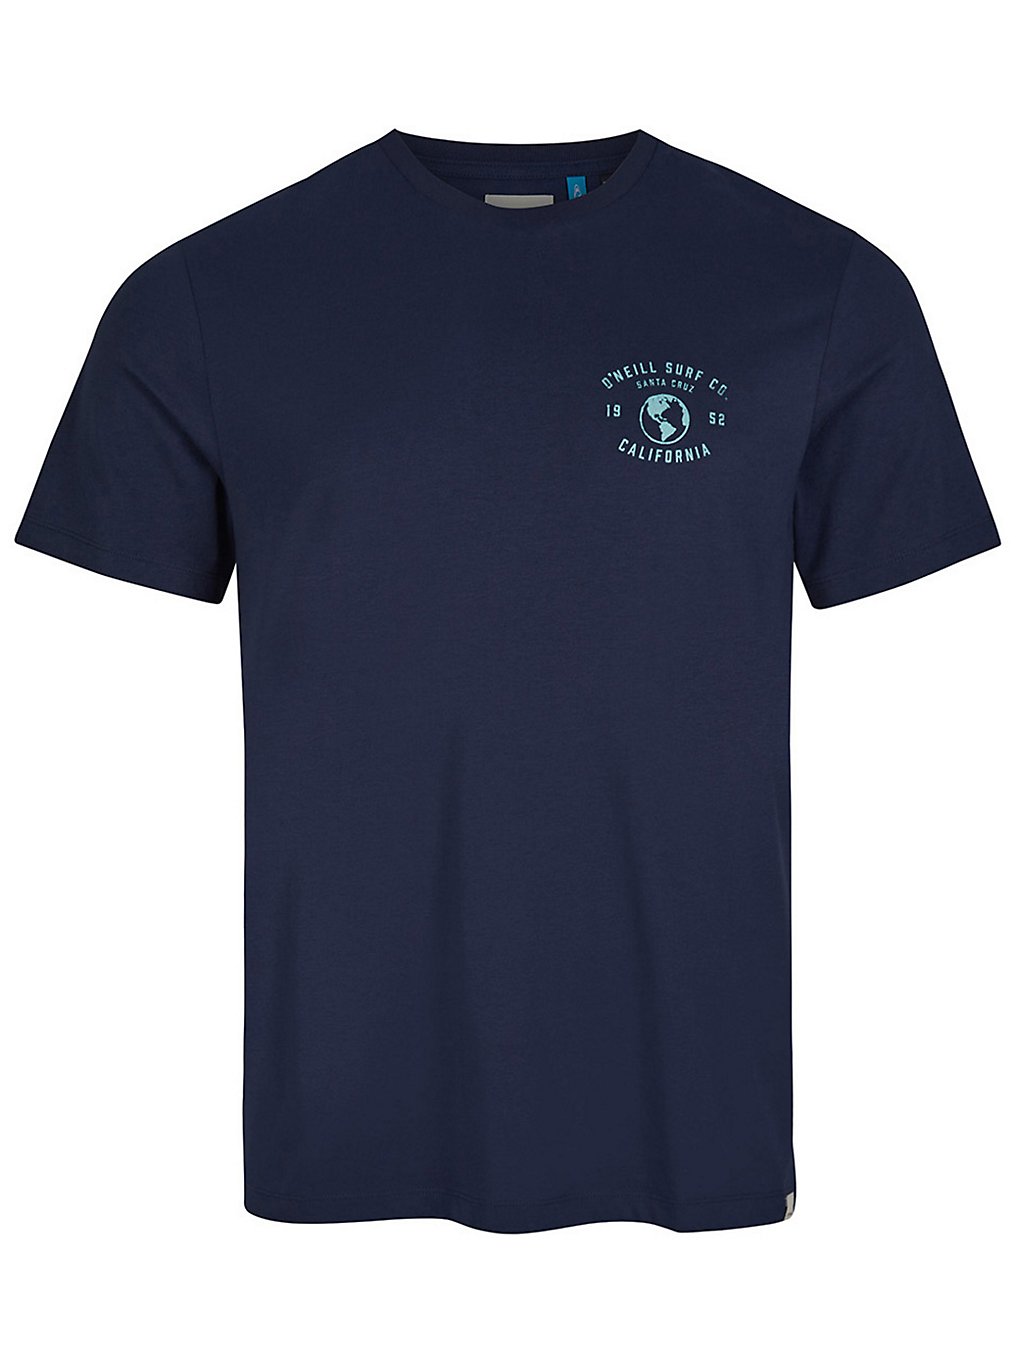 O'Neill It's A Small World T-Shirt ink blue